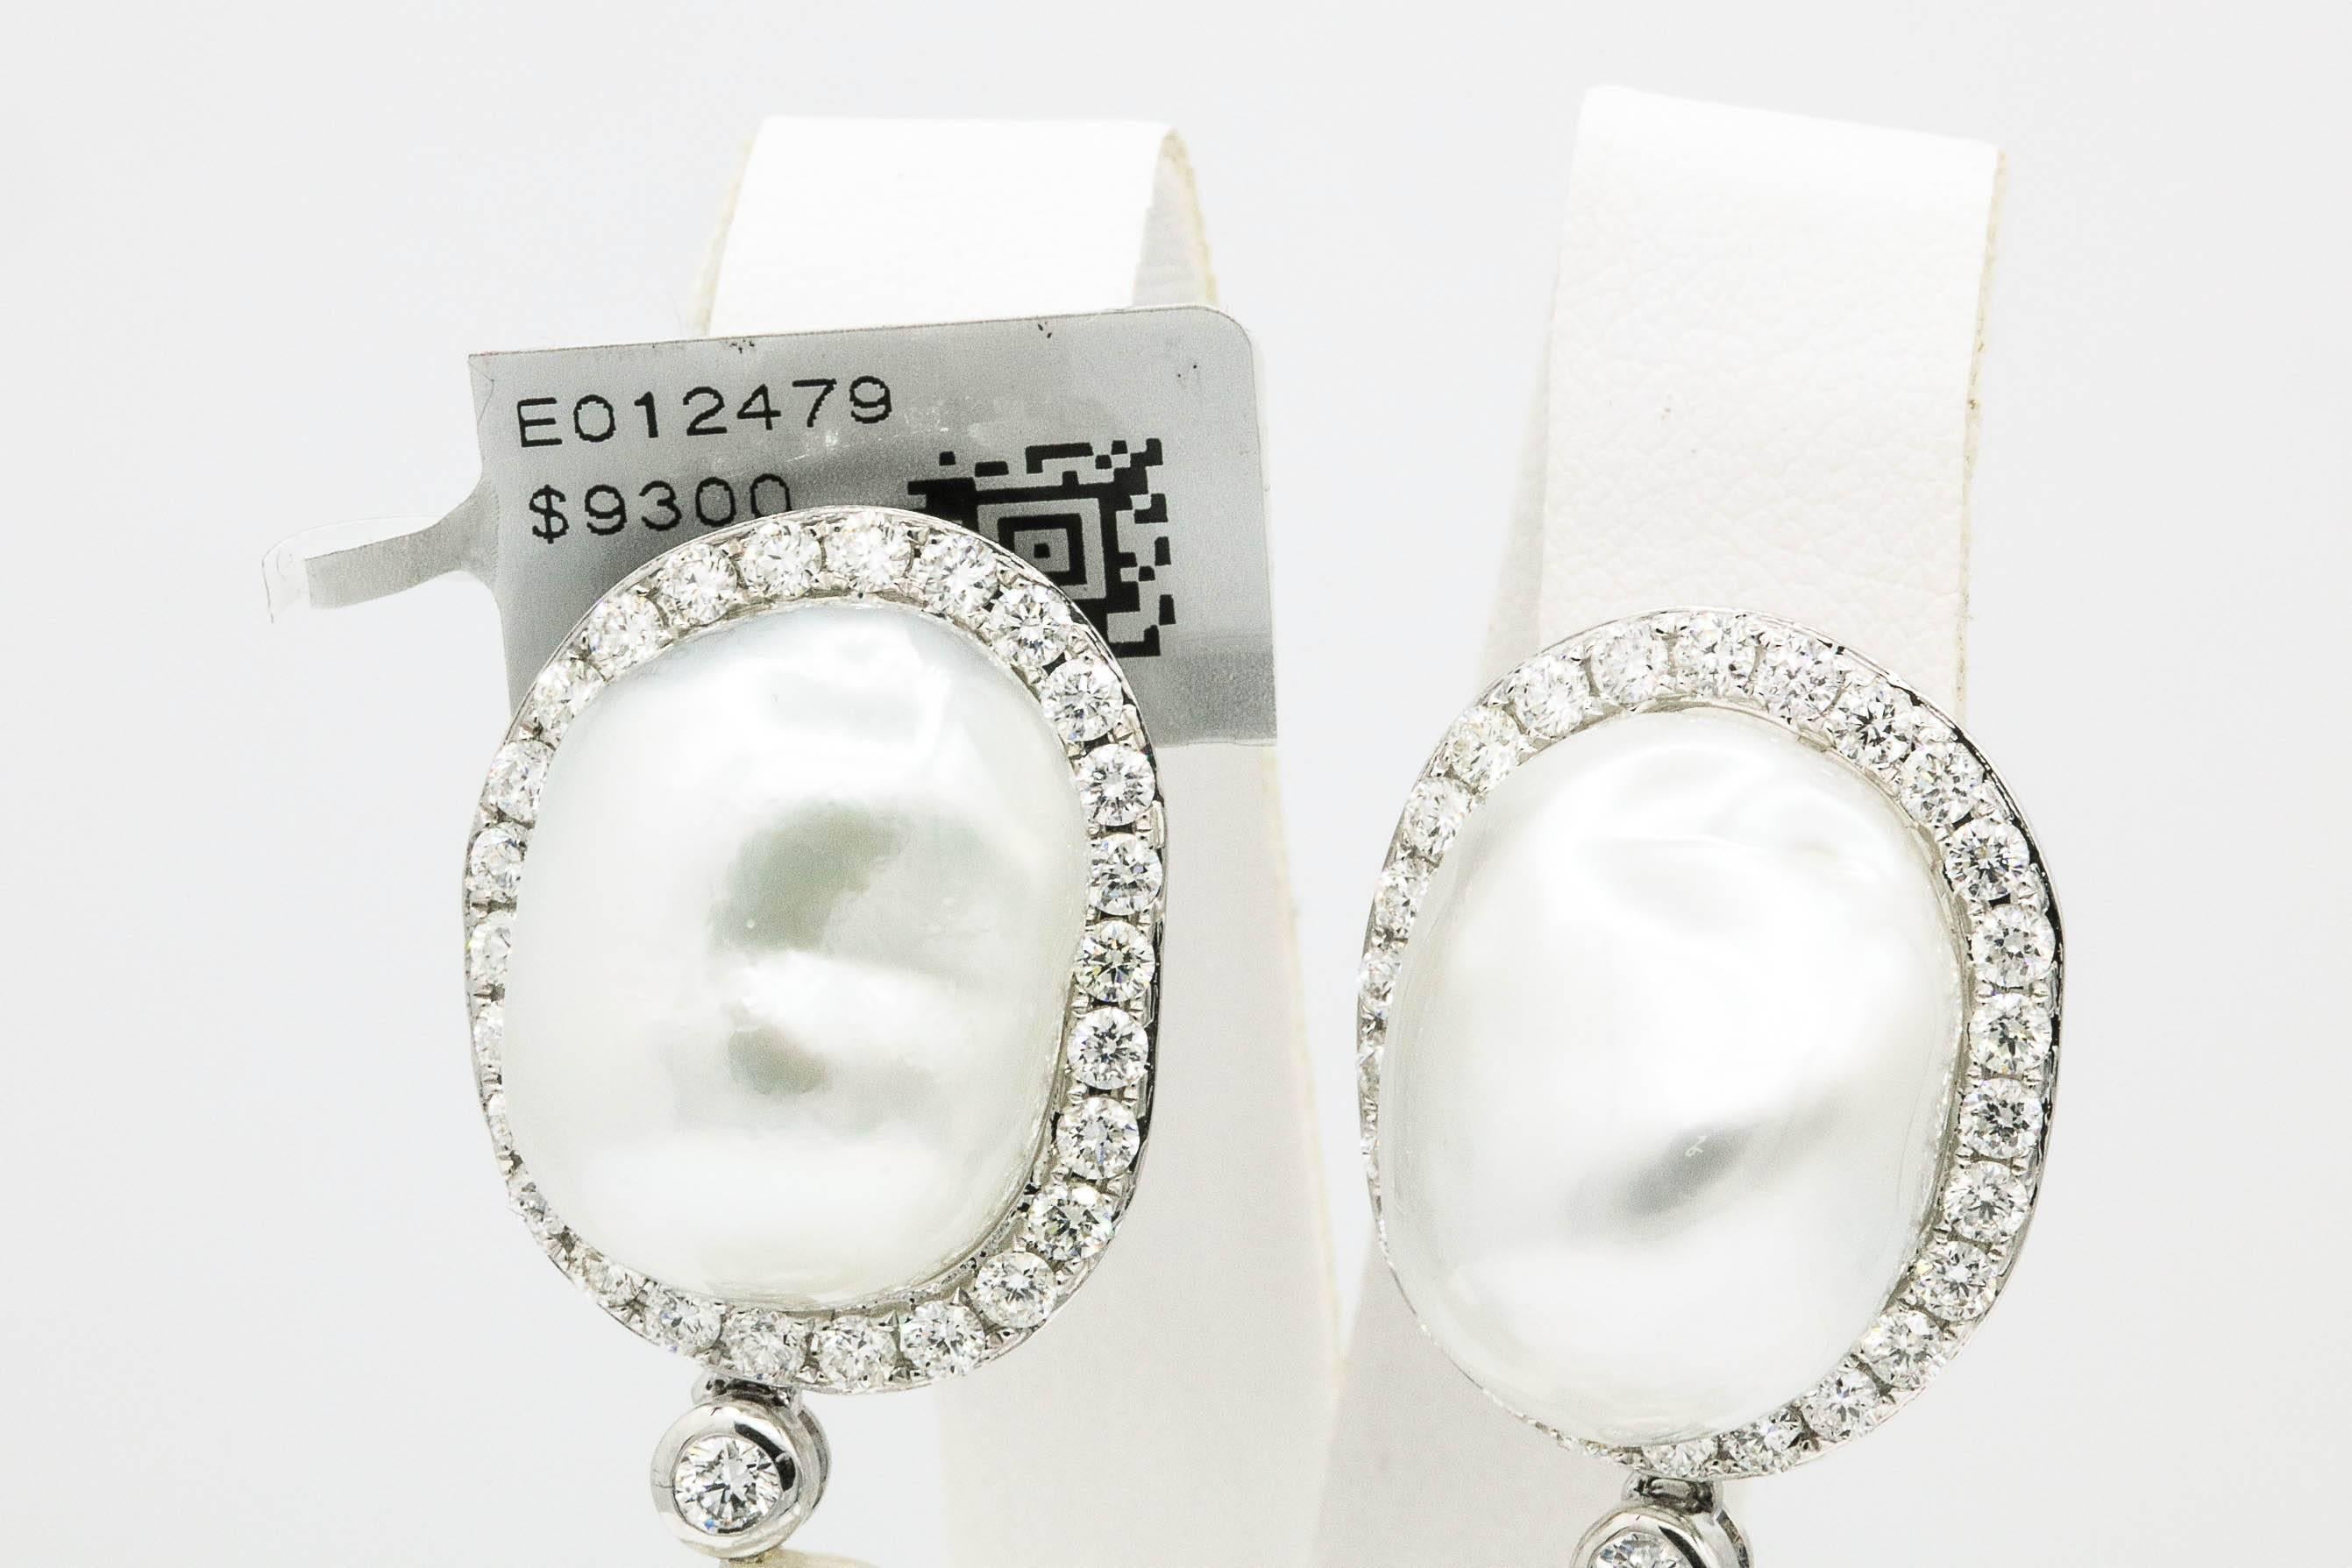 18K White Gold
South Sea Baroque 12-16 mm
Diamonds 1.60 Carats
Earrings 1.75